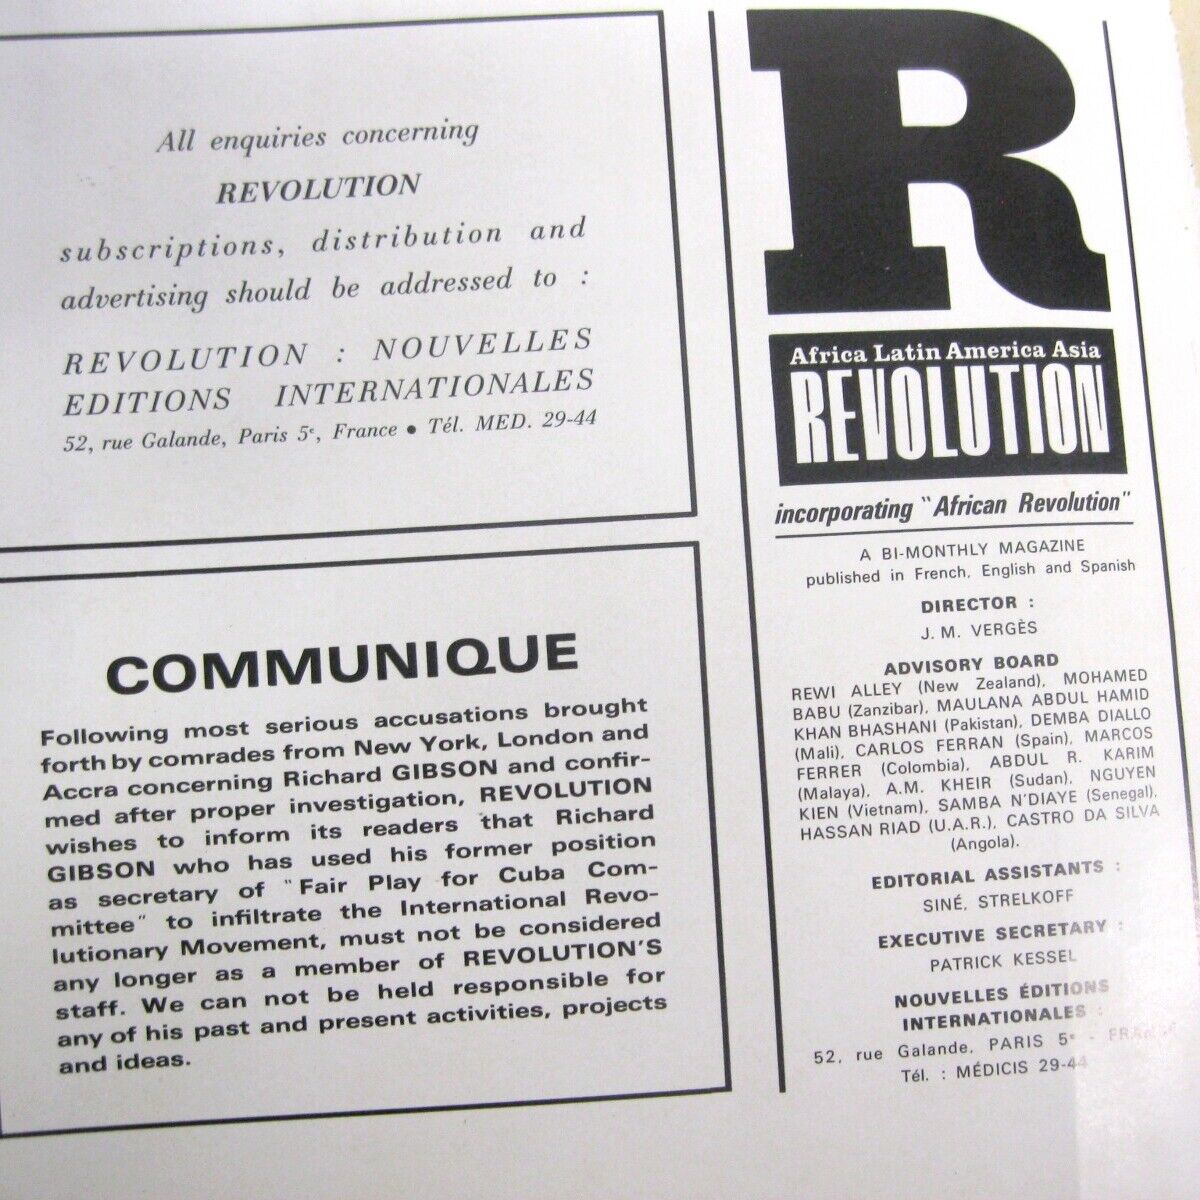 Revolution Bi-Monthly Magazine Vol II No 1 Sept-Oct 1964